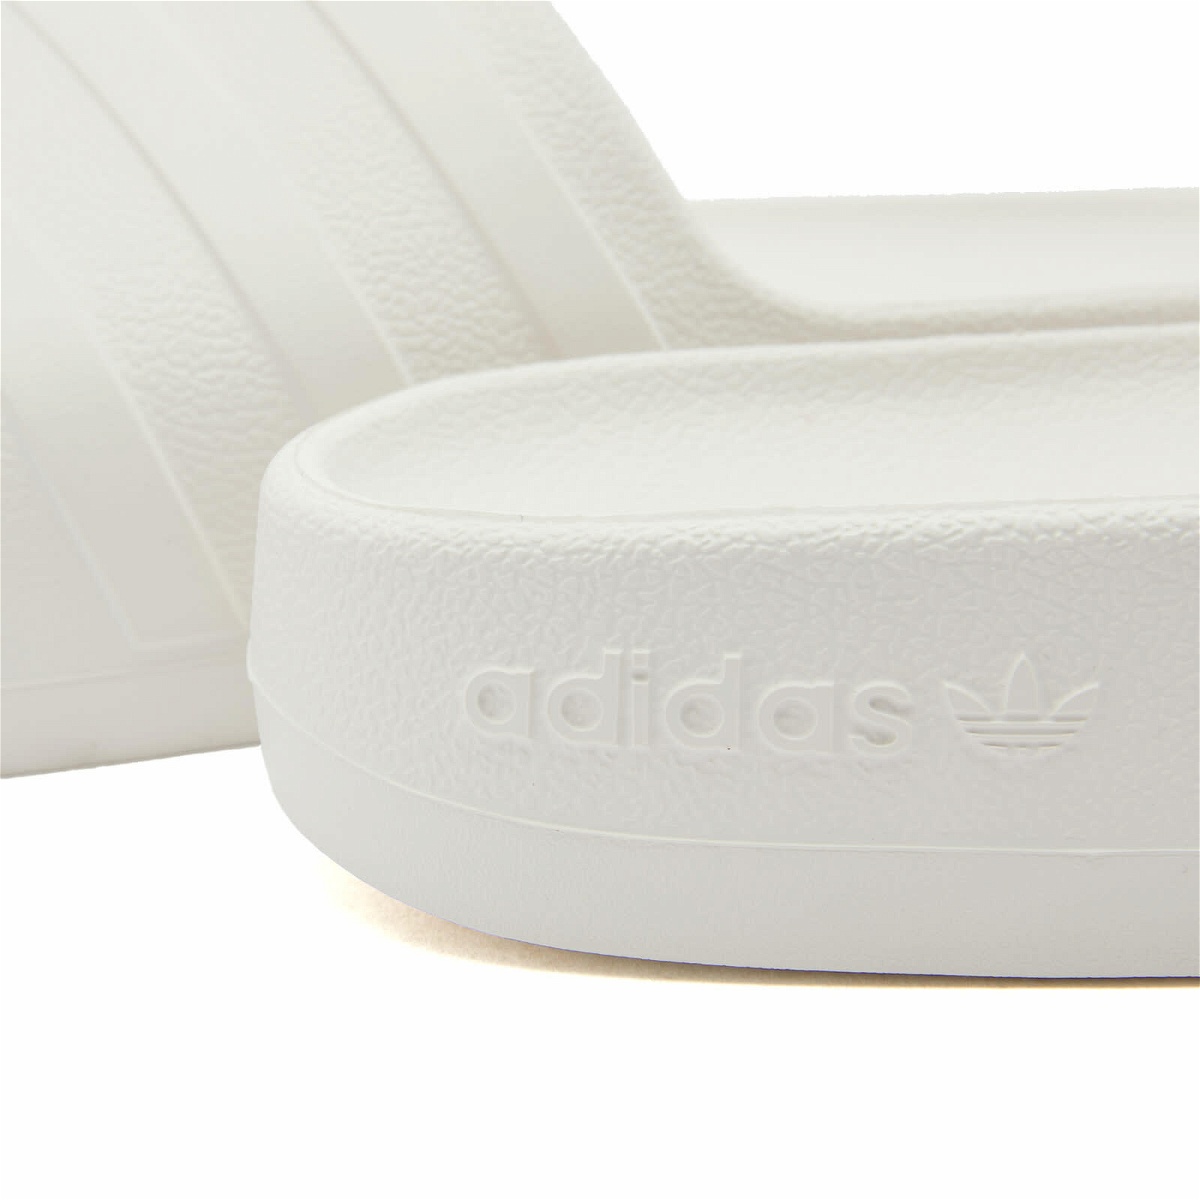 Women's shoes adidas Adilette 22 W Off White/ Off White/ Core